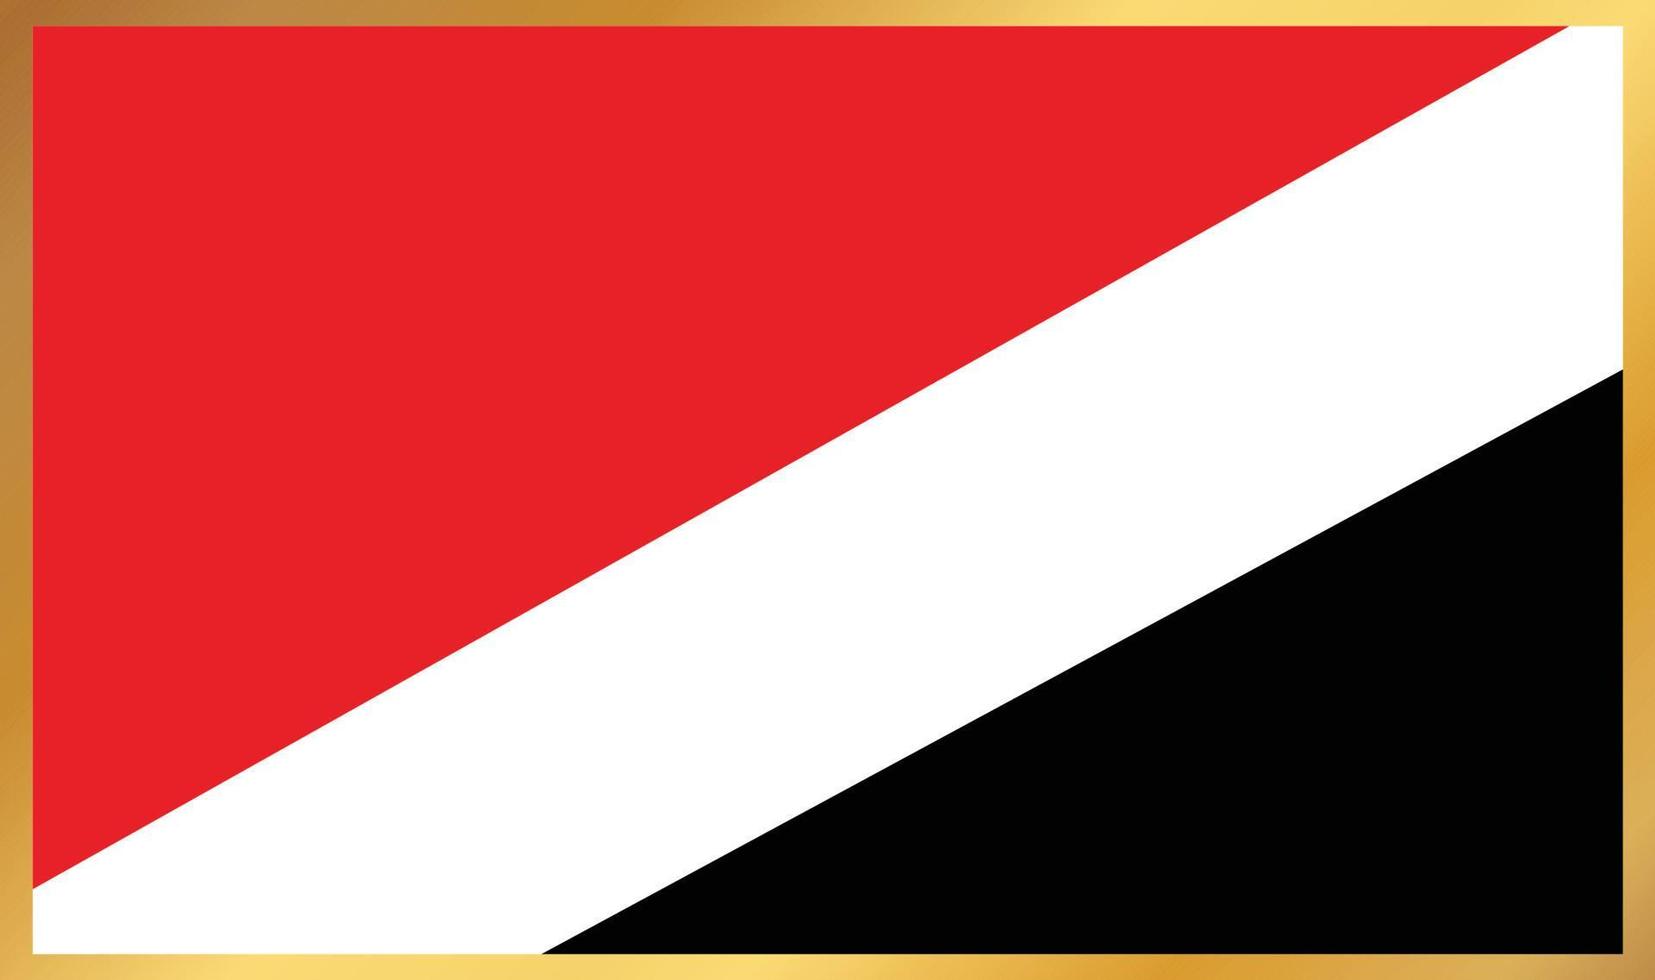 sealand Principality of Sealand flag, vector illustration